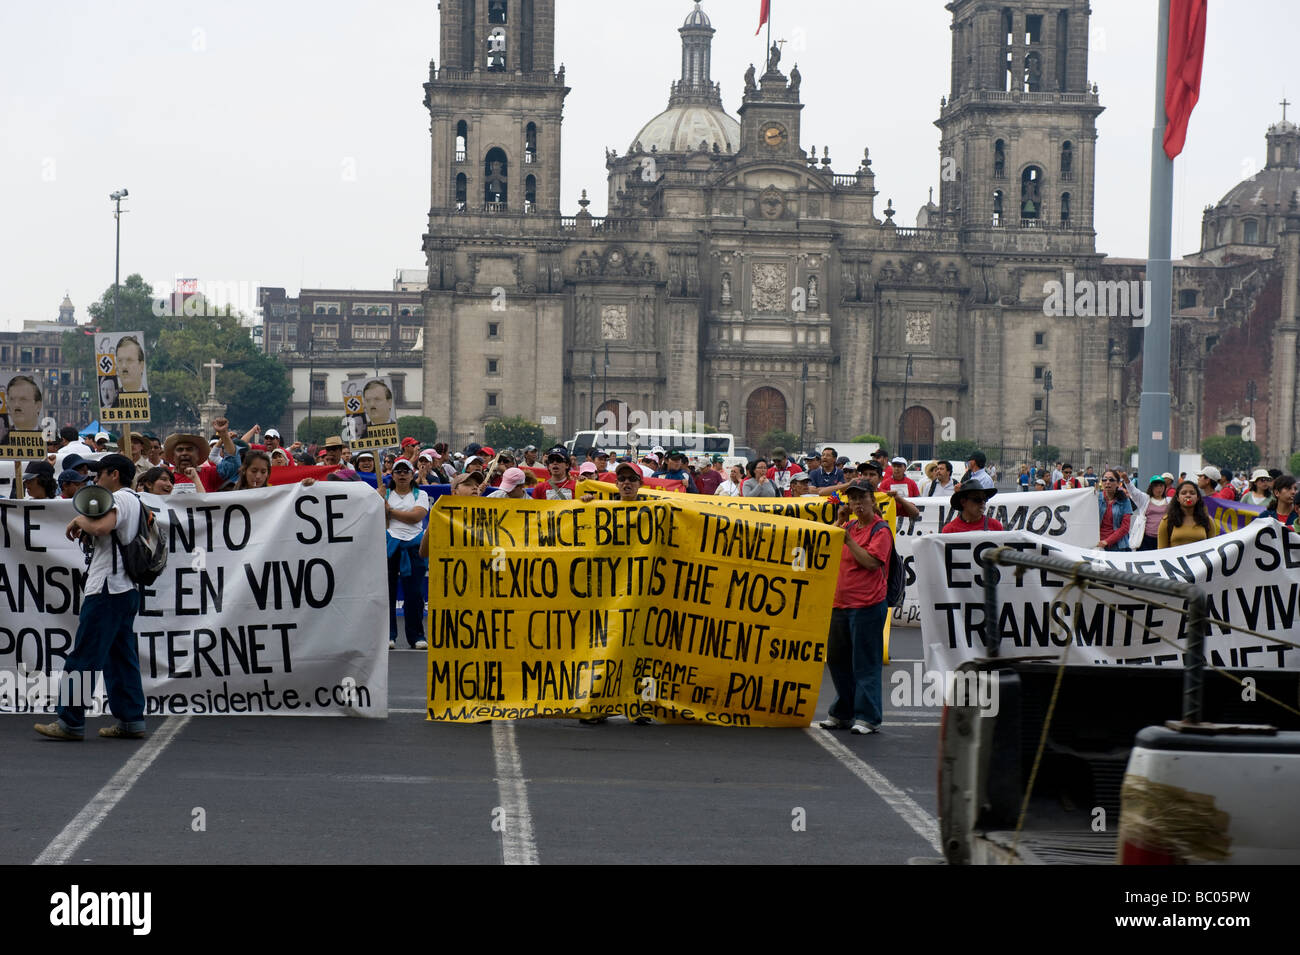 A demonstration on El Zocalo, Mexico City Stock Photo